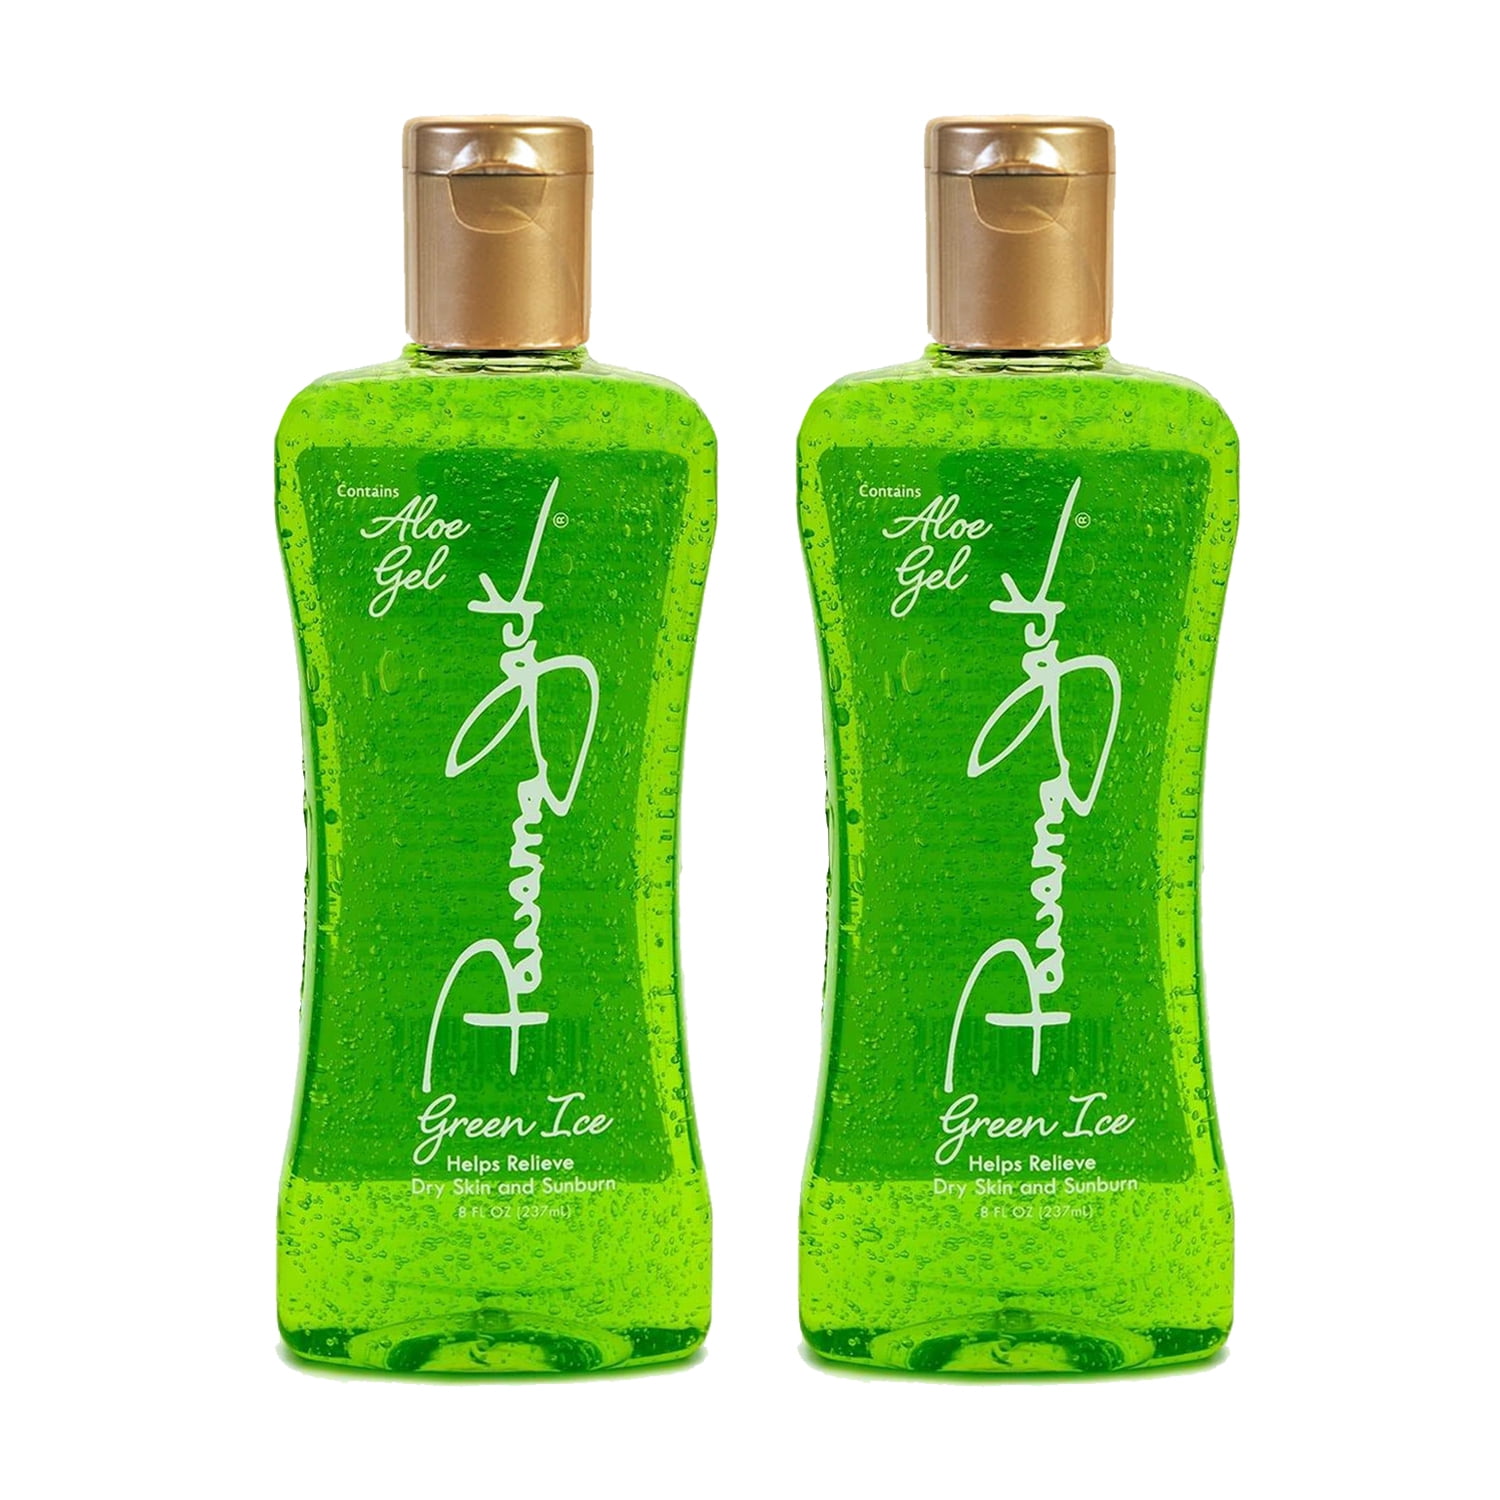 Panama Jack Green Ice Gel - Aloe Vera After Sun Formula No Alcohol, Helps Preserve Tan, Relieves & Moisturizes Sunburn, 8 FL OZ (Pack of 2) - Walmart.com